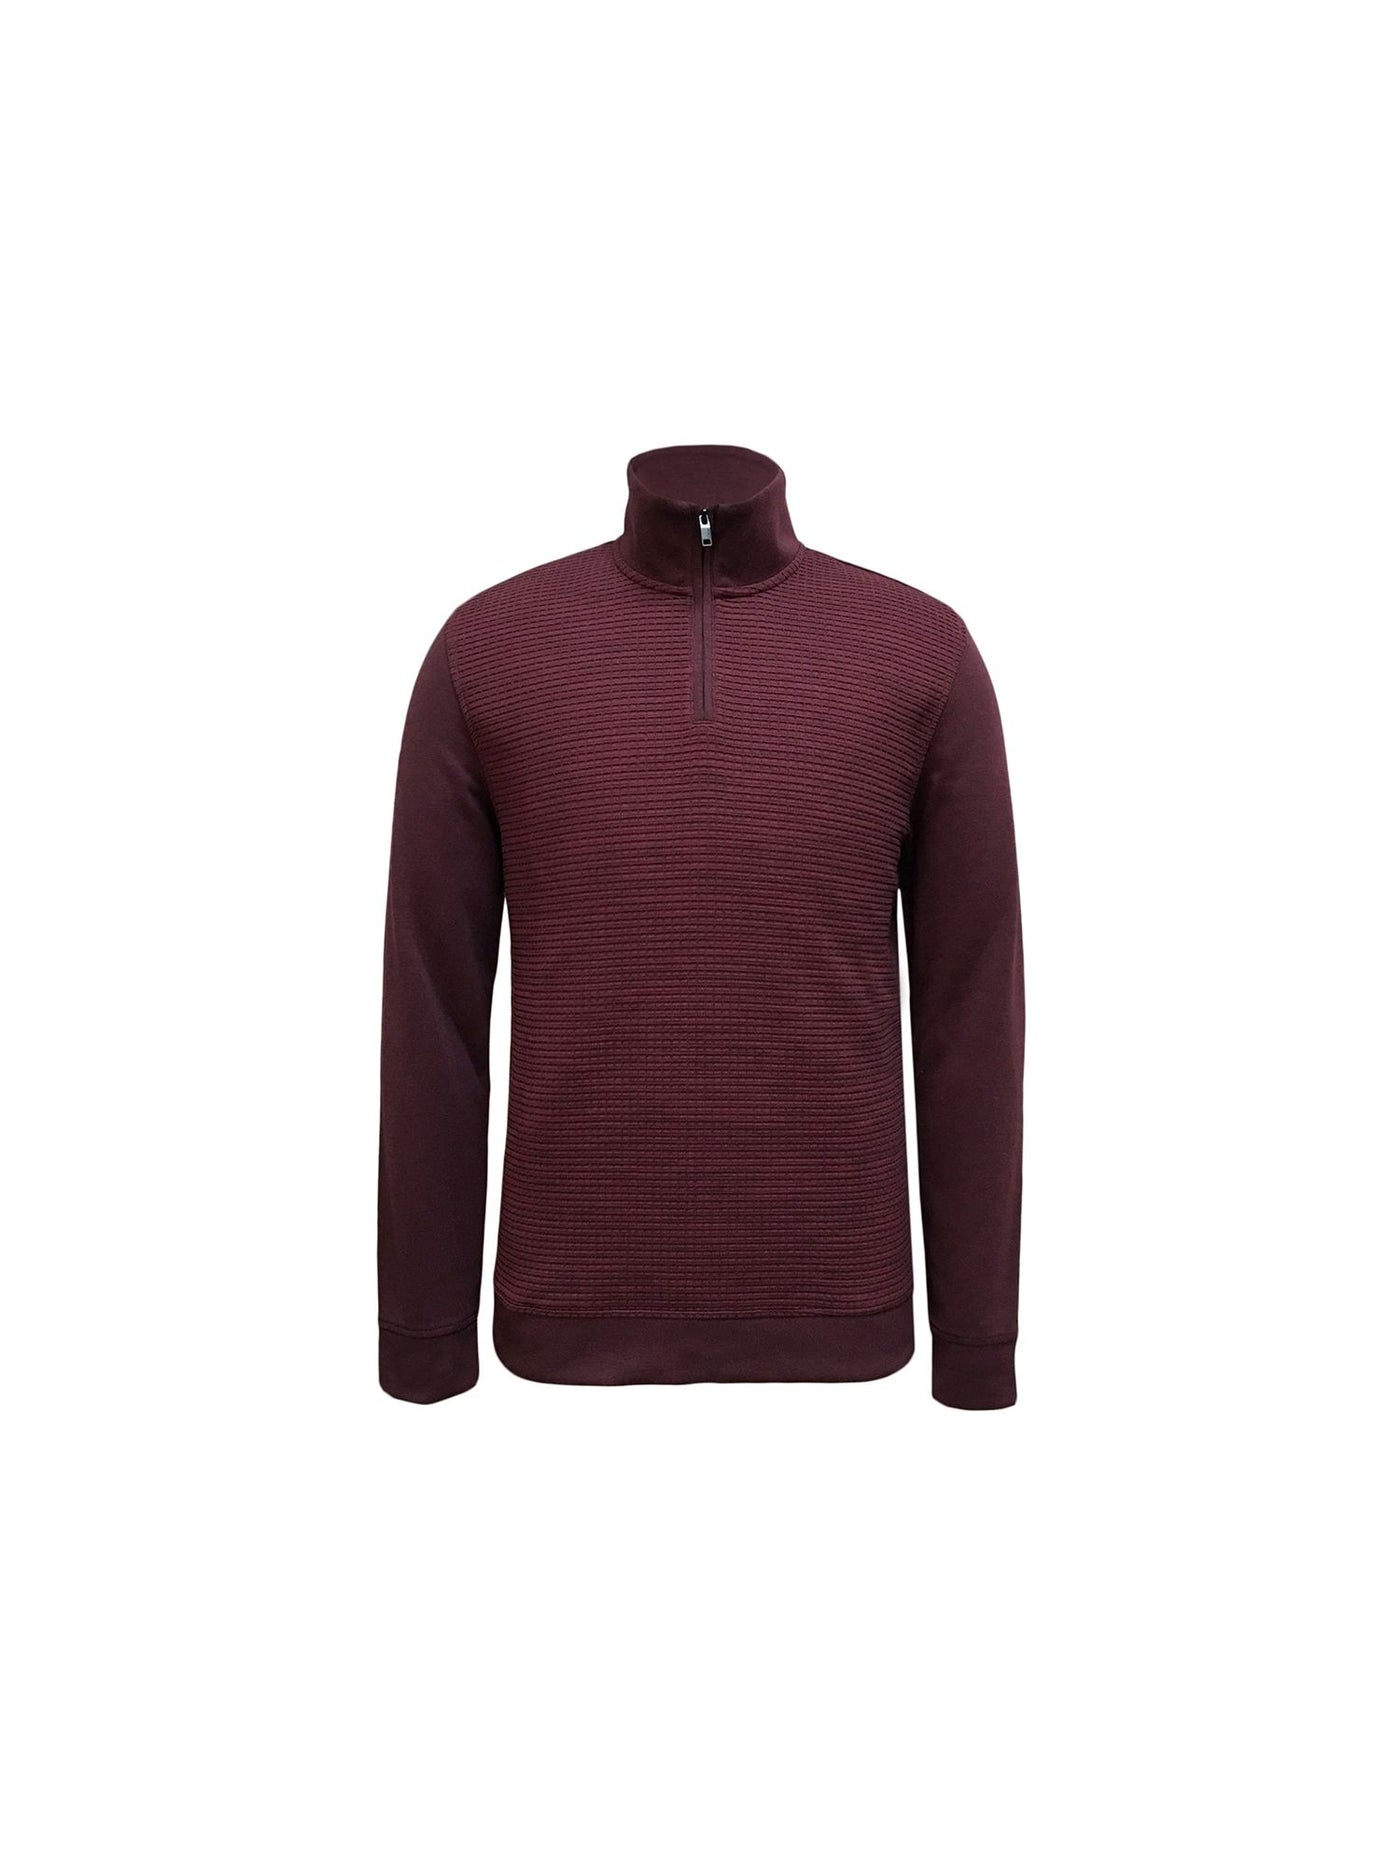 ALFANI Mens Burgundy Color Block Mock Classic Fit Quarter-Zip Cotton Blend Pullover Sweater S